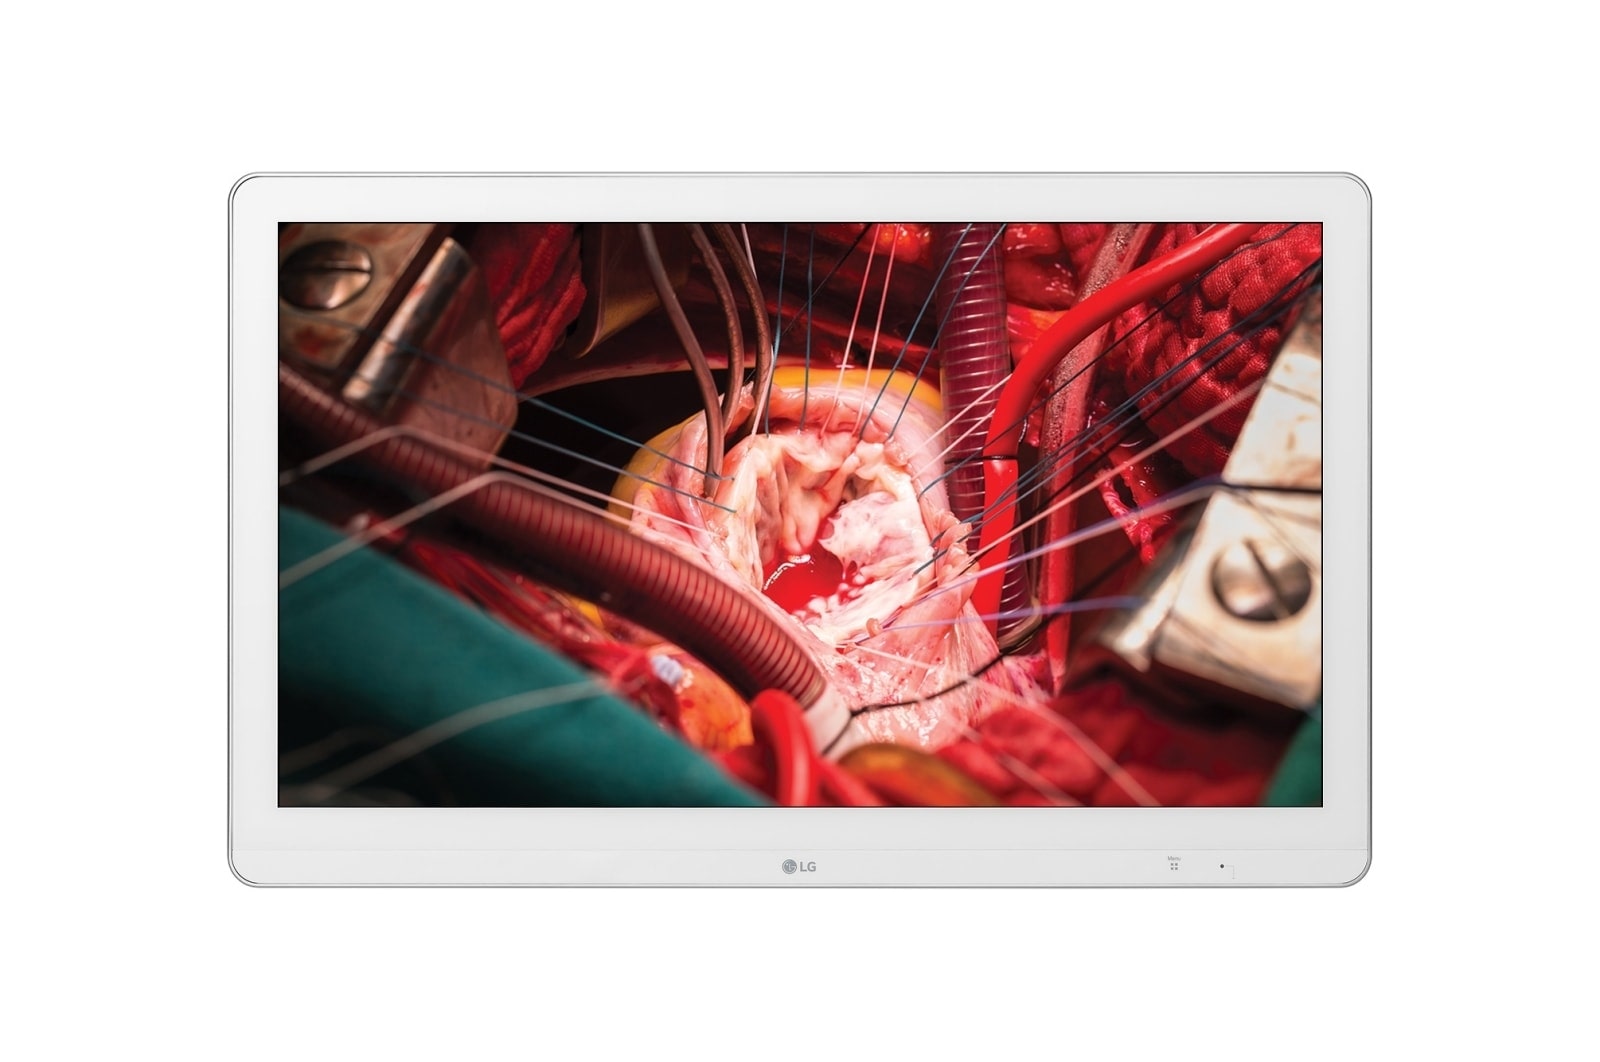 LG 27'' Full HD IPS Surgical Monitor, 27HK510S-W